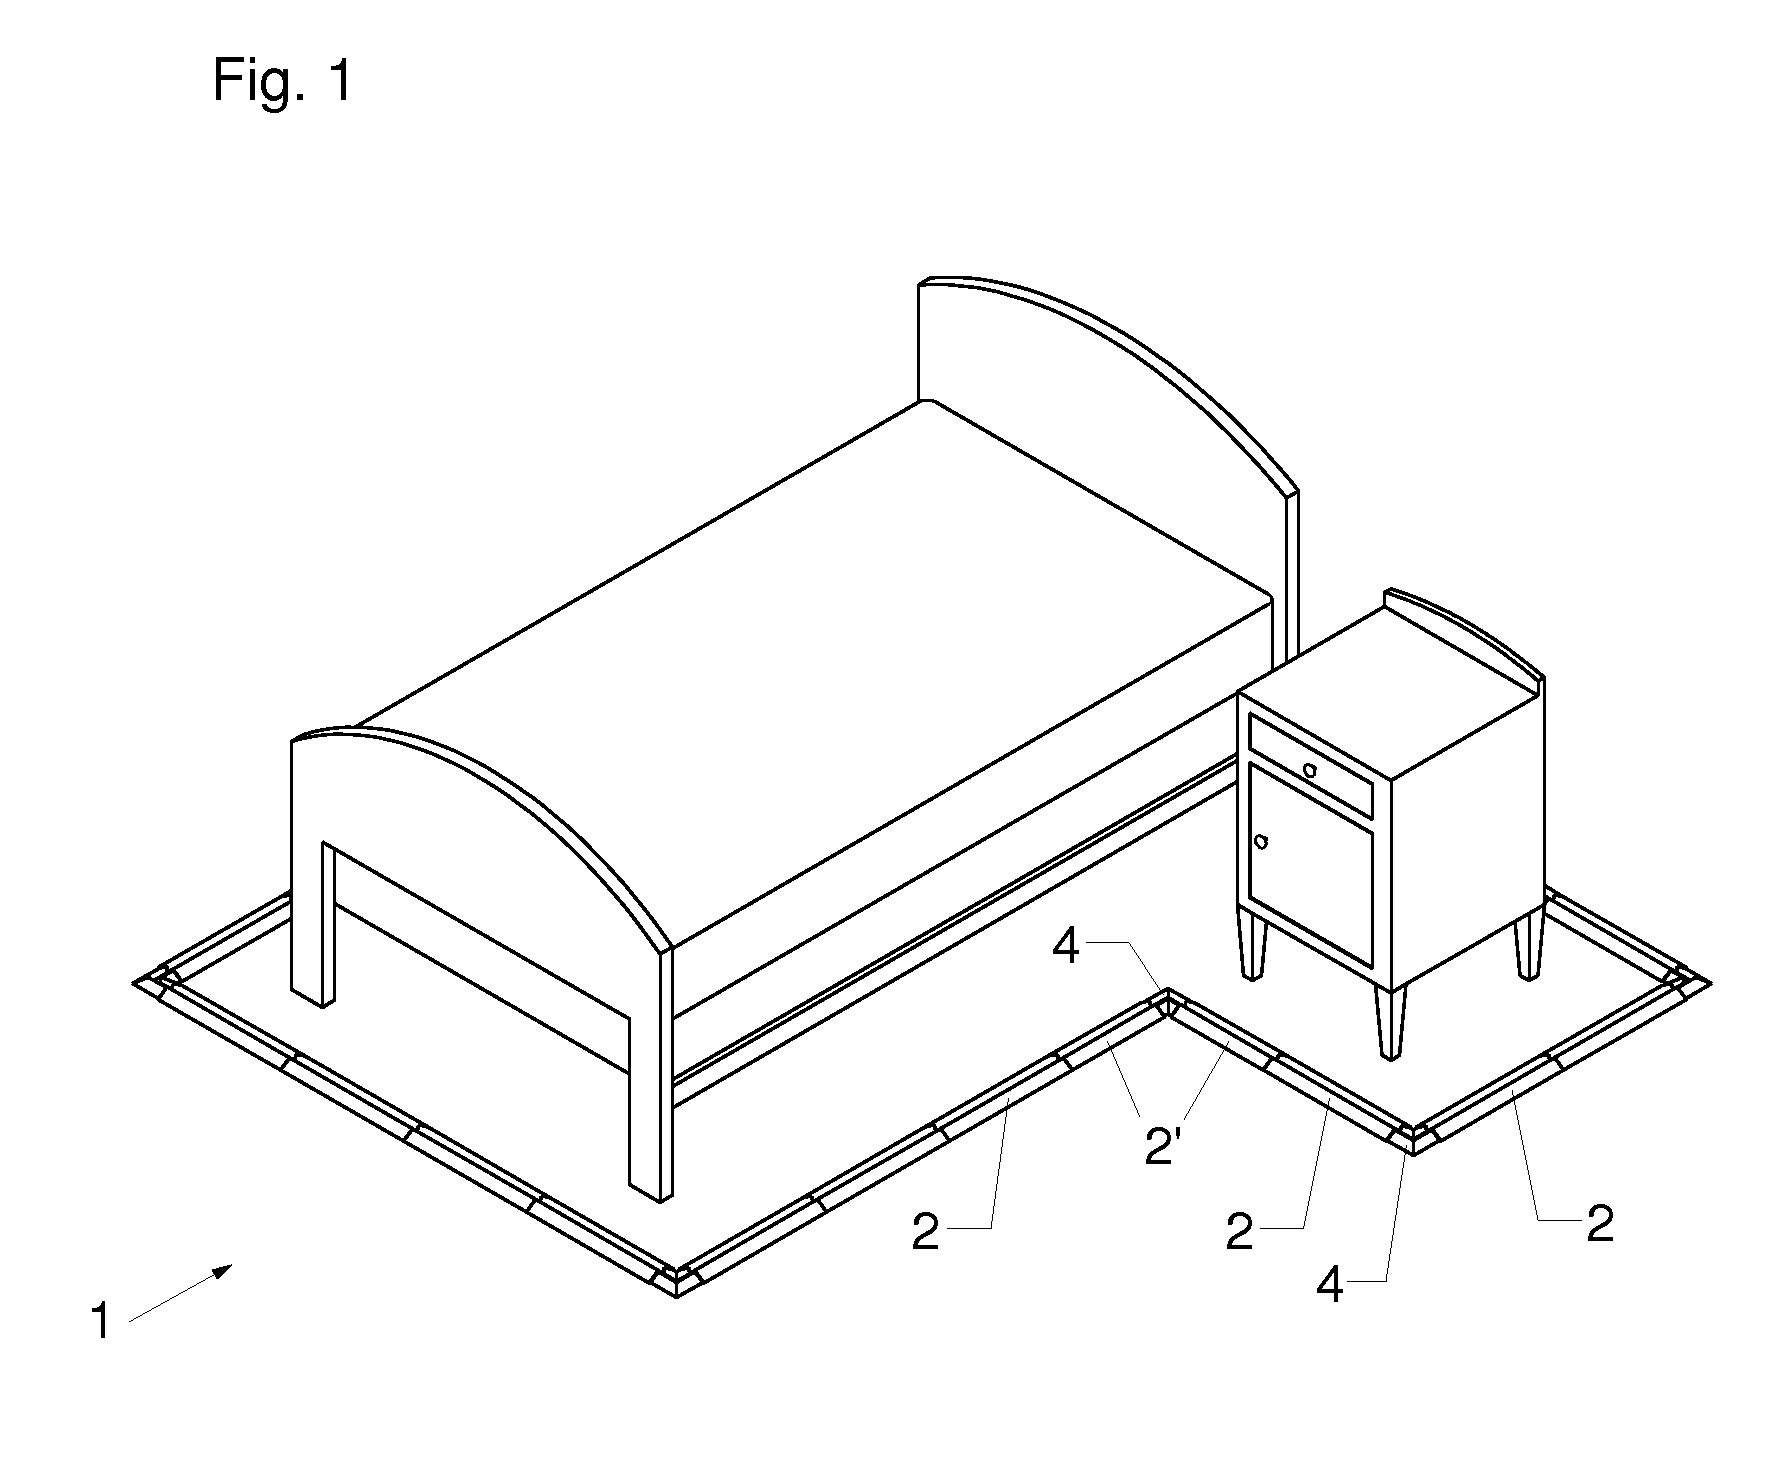 Modular bed bug trap system